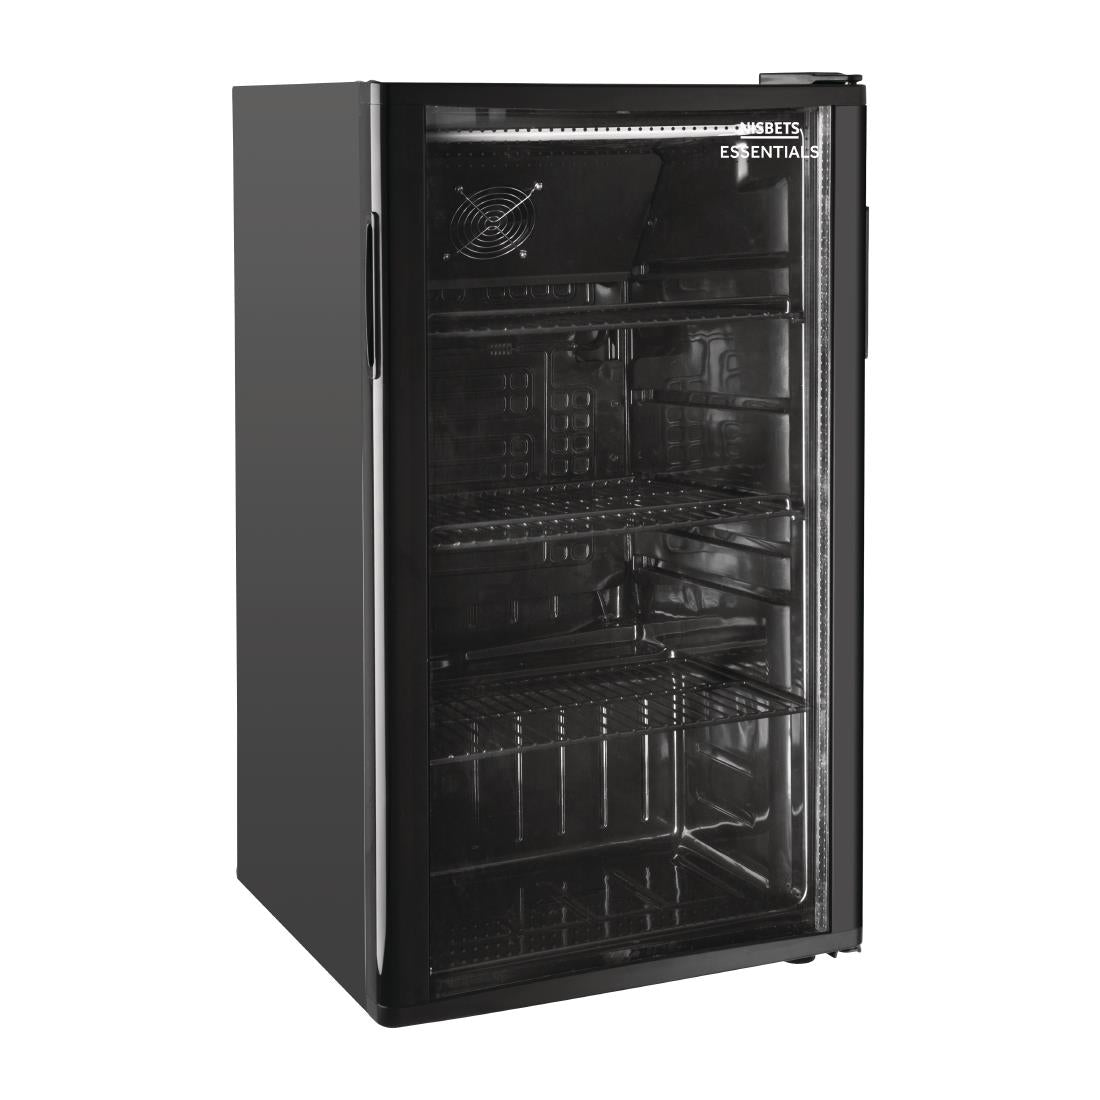 DB303 Nisbets Essentials Single Door Back Bar Cooler 92Ltr JD Catering Equipment Solutions Ltd